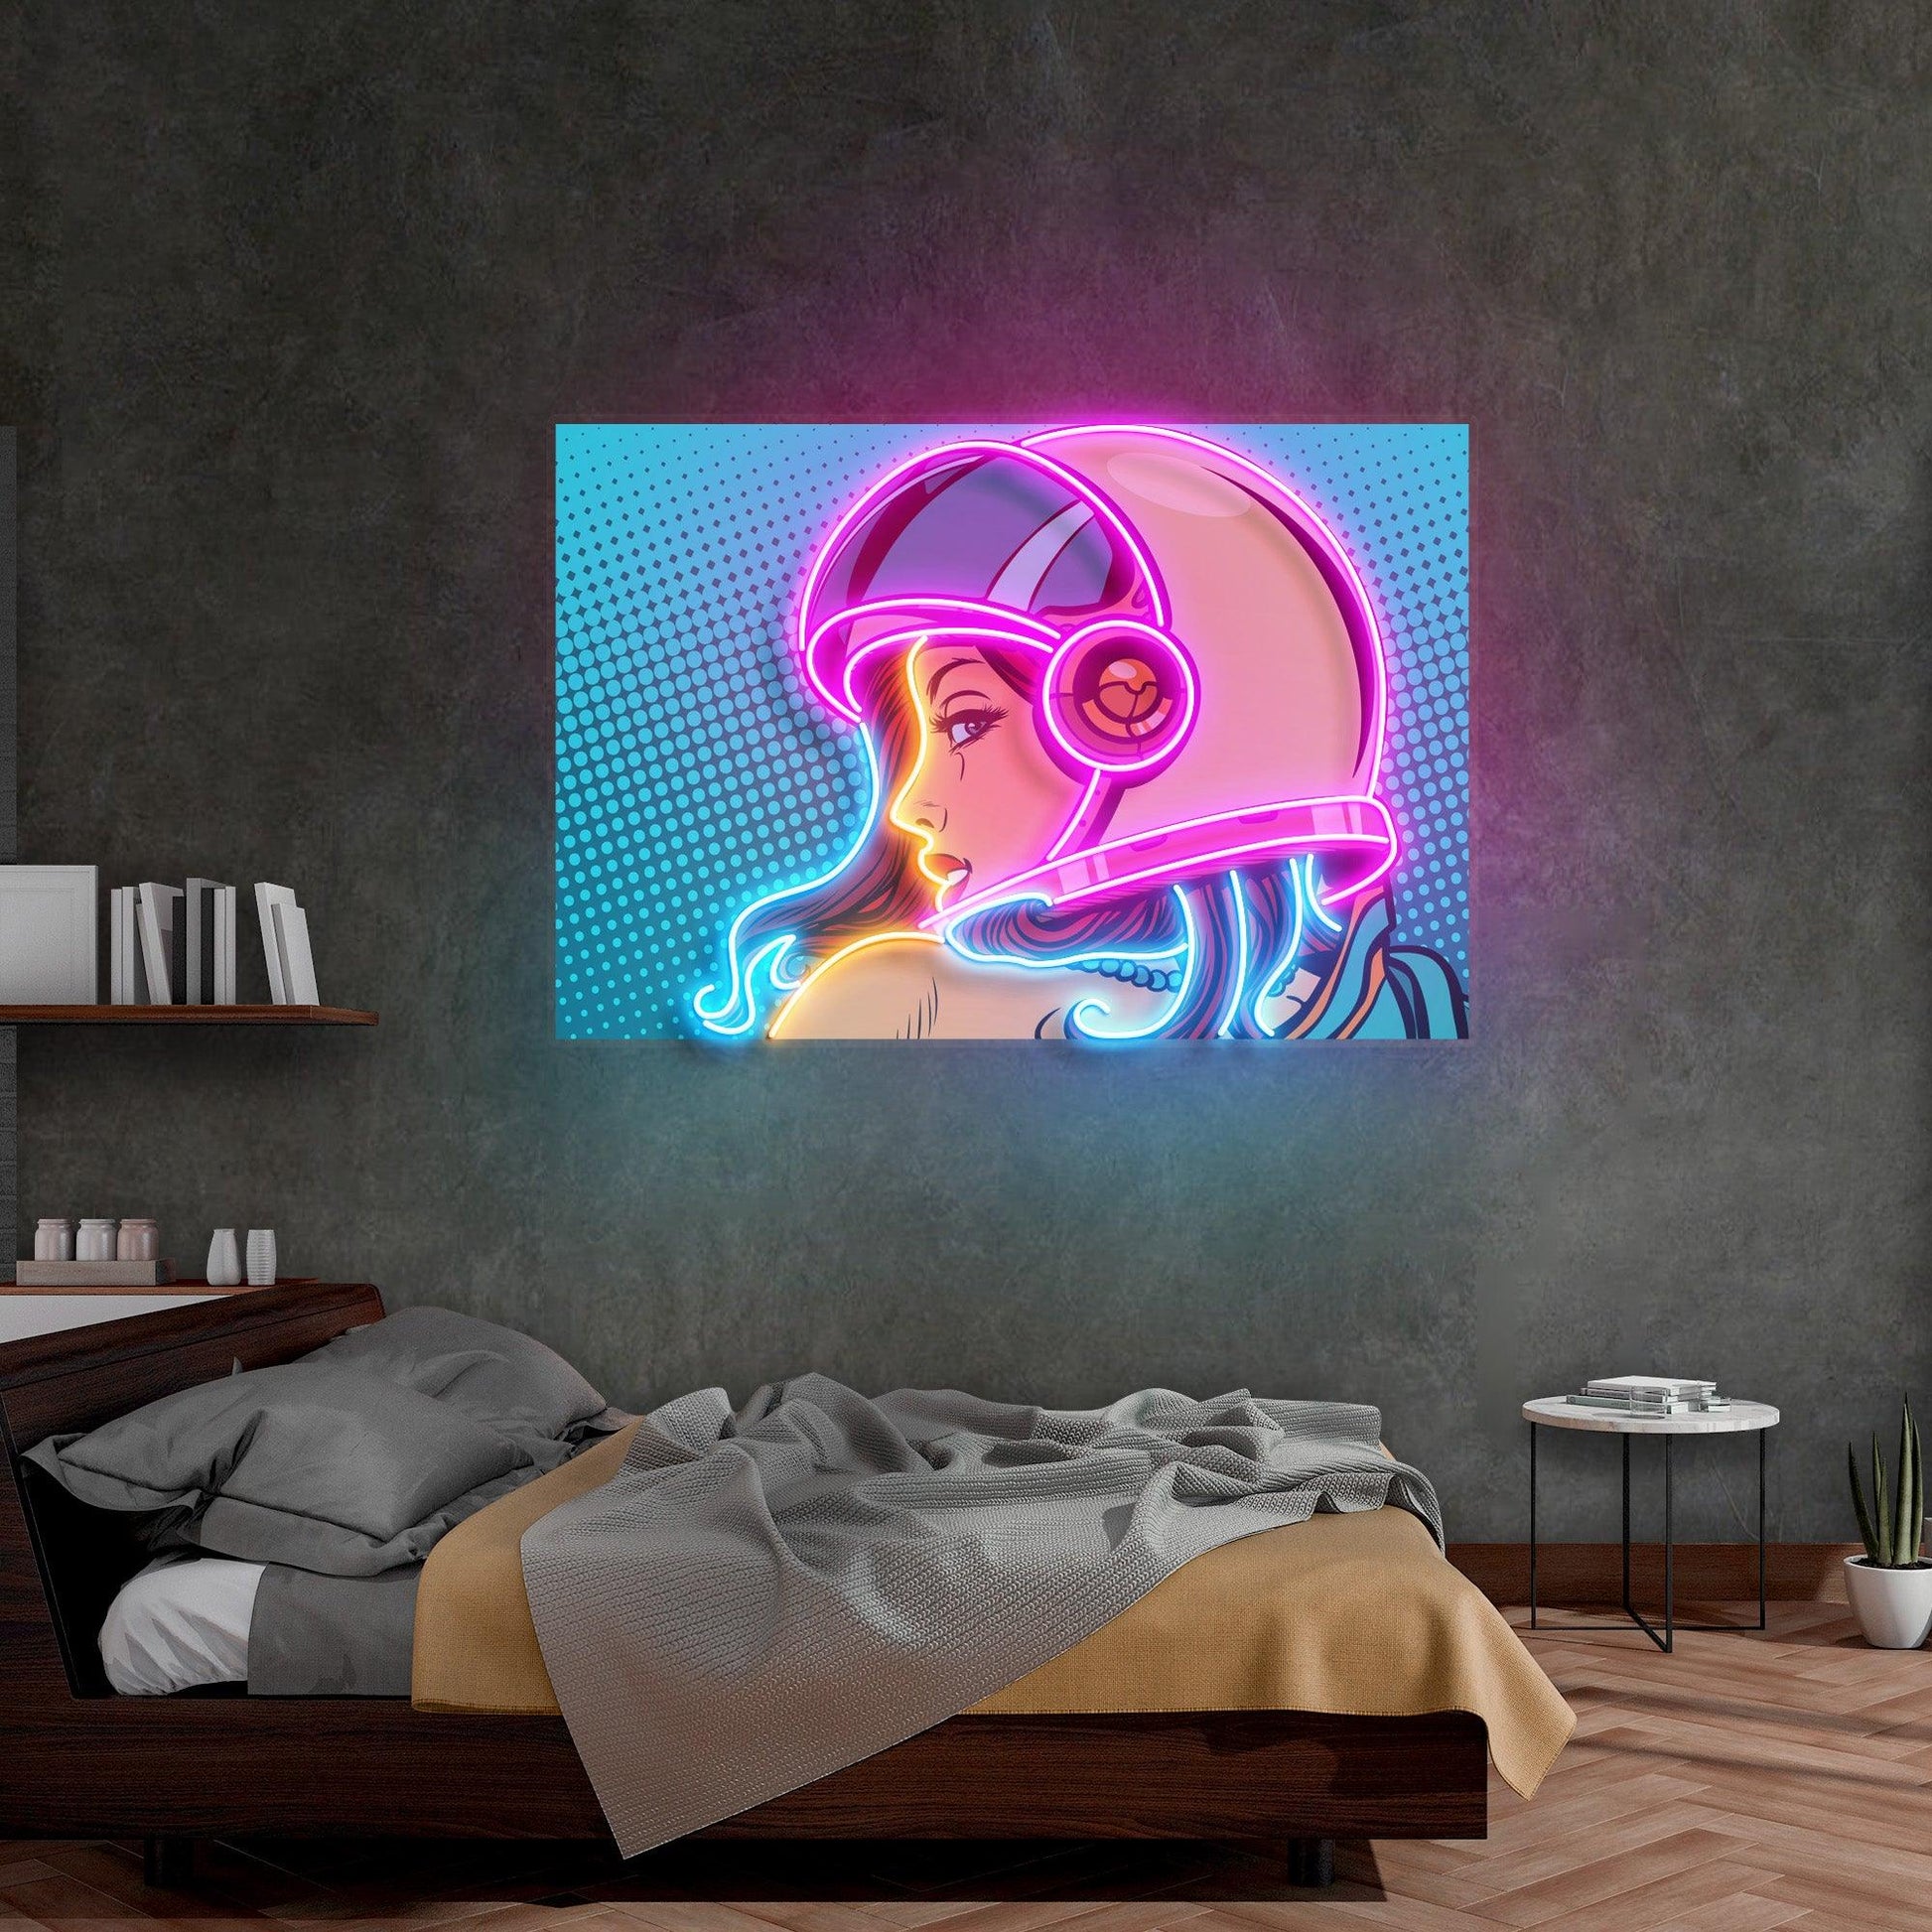 Is This Art Led Neon Acrylic Artwork